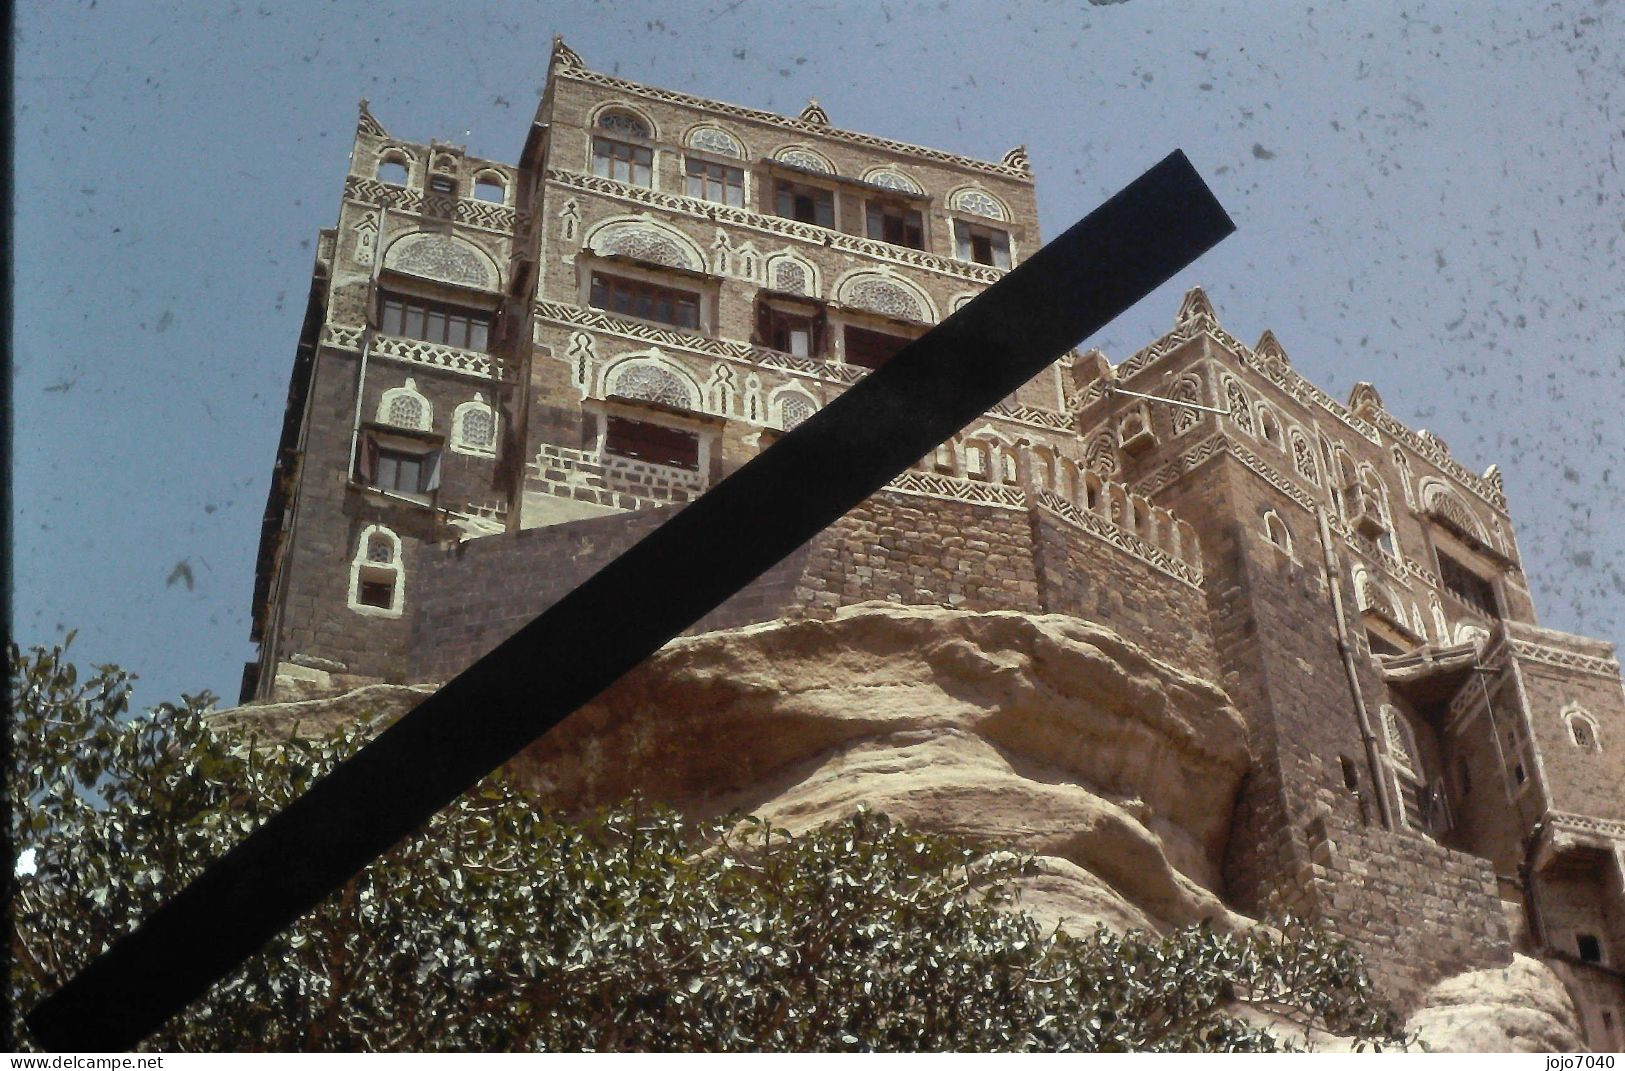 Yemen 1980 - Diapositive